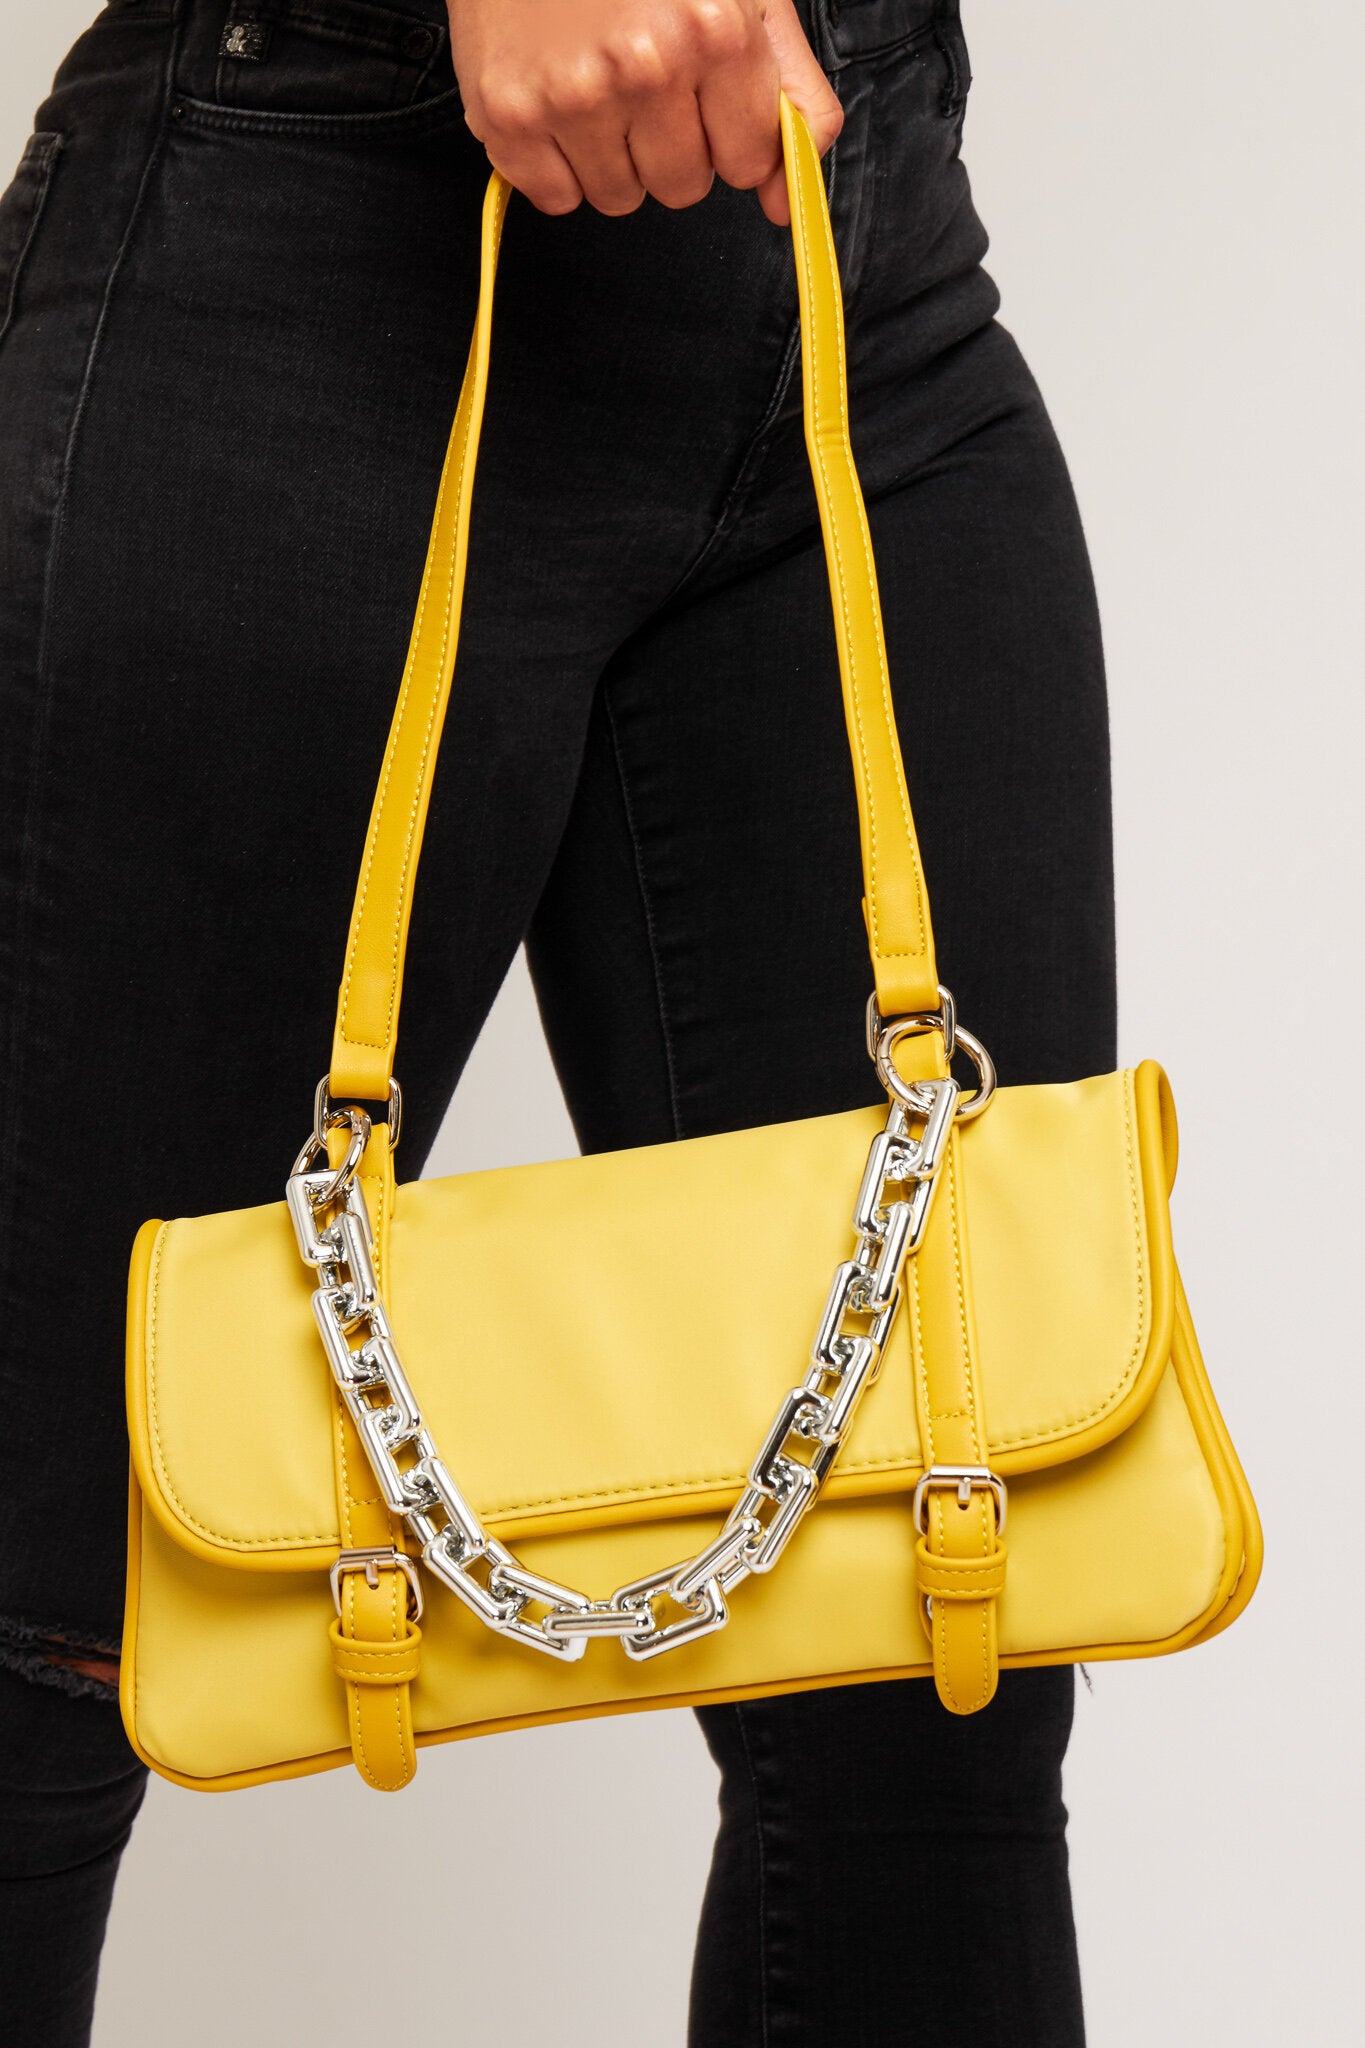 Shopaholic Handbag - Yellow